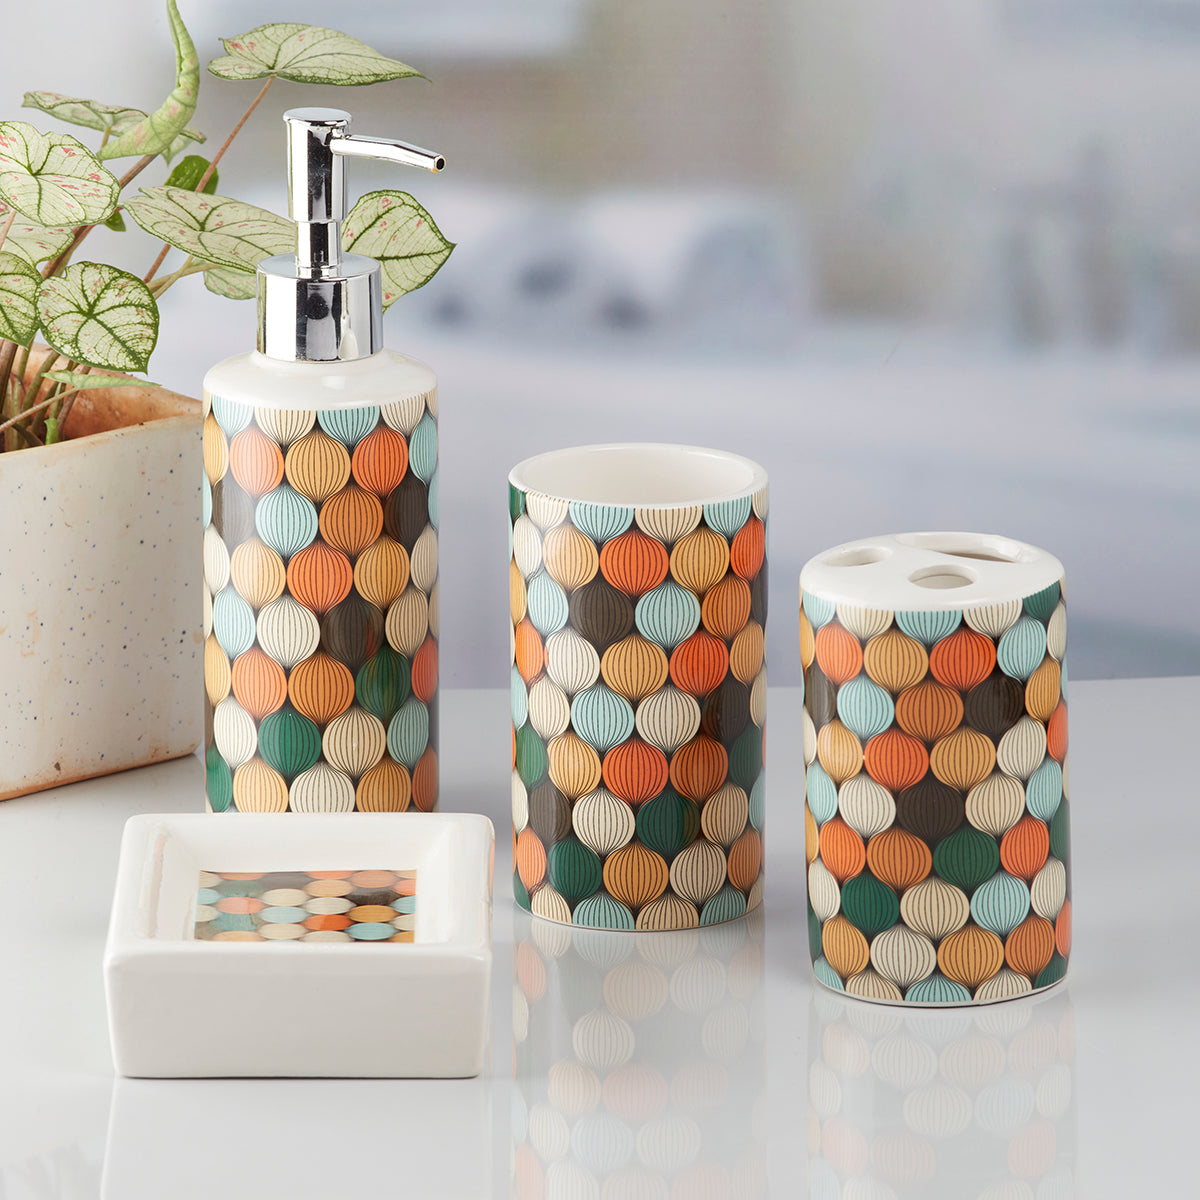 Ceramic Bathroom Accessories Set of 4 Bath Set with Soap Dispenser (7687)